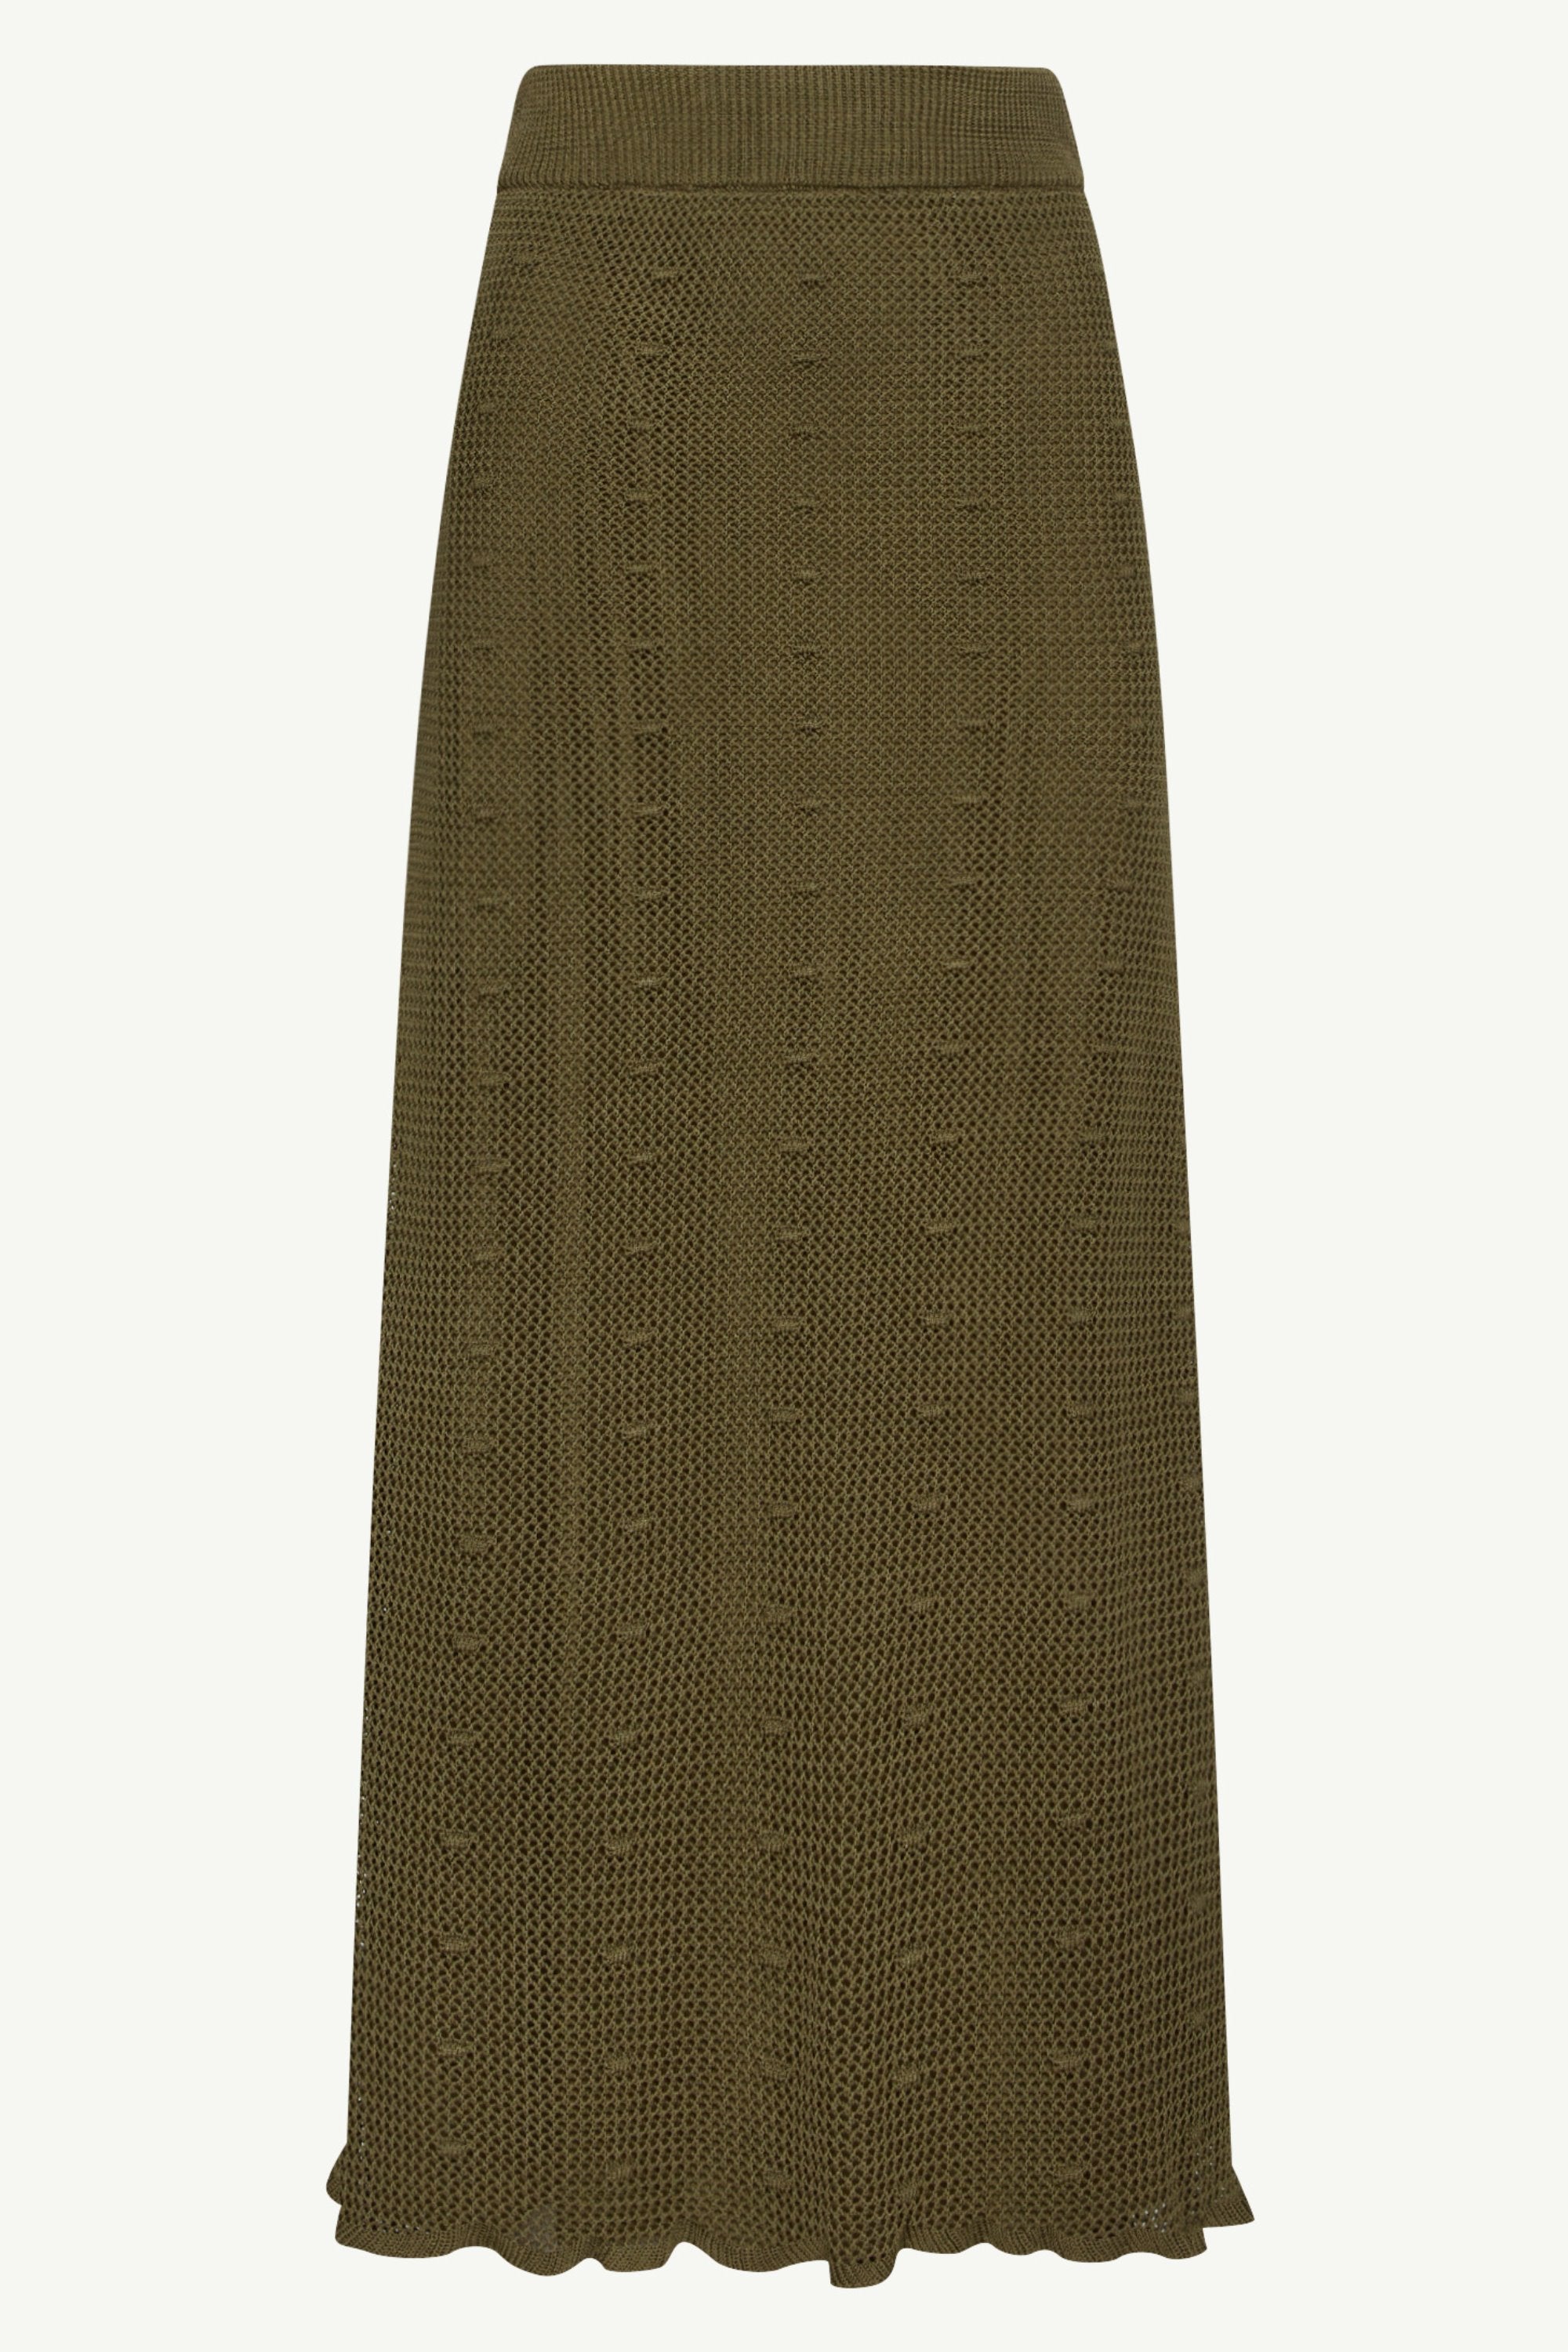 Yara Crochet Maxi Skirt - Dark Olive Clothing epschoolboard 